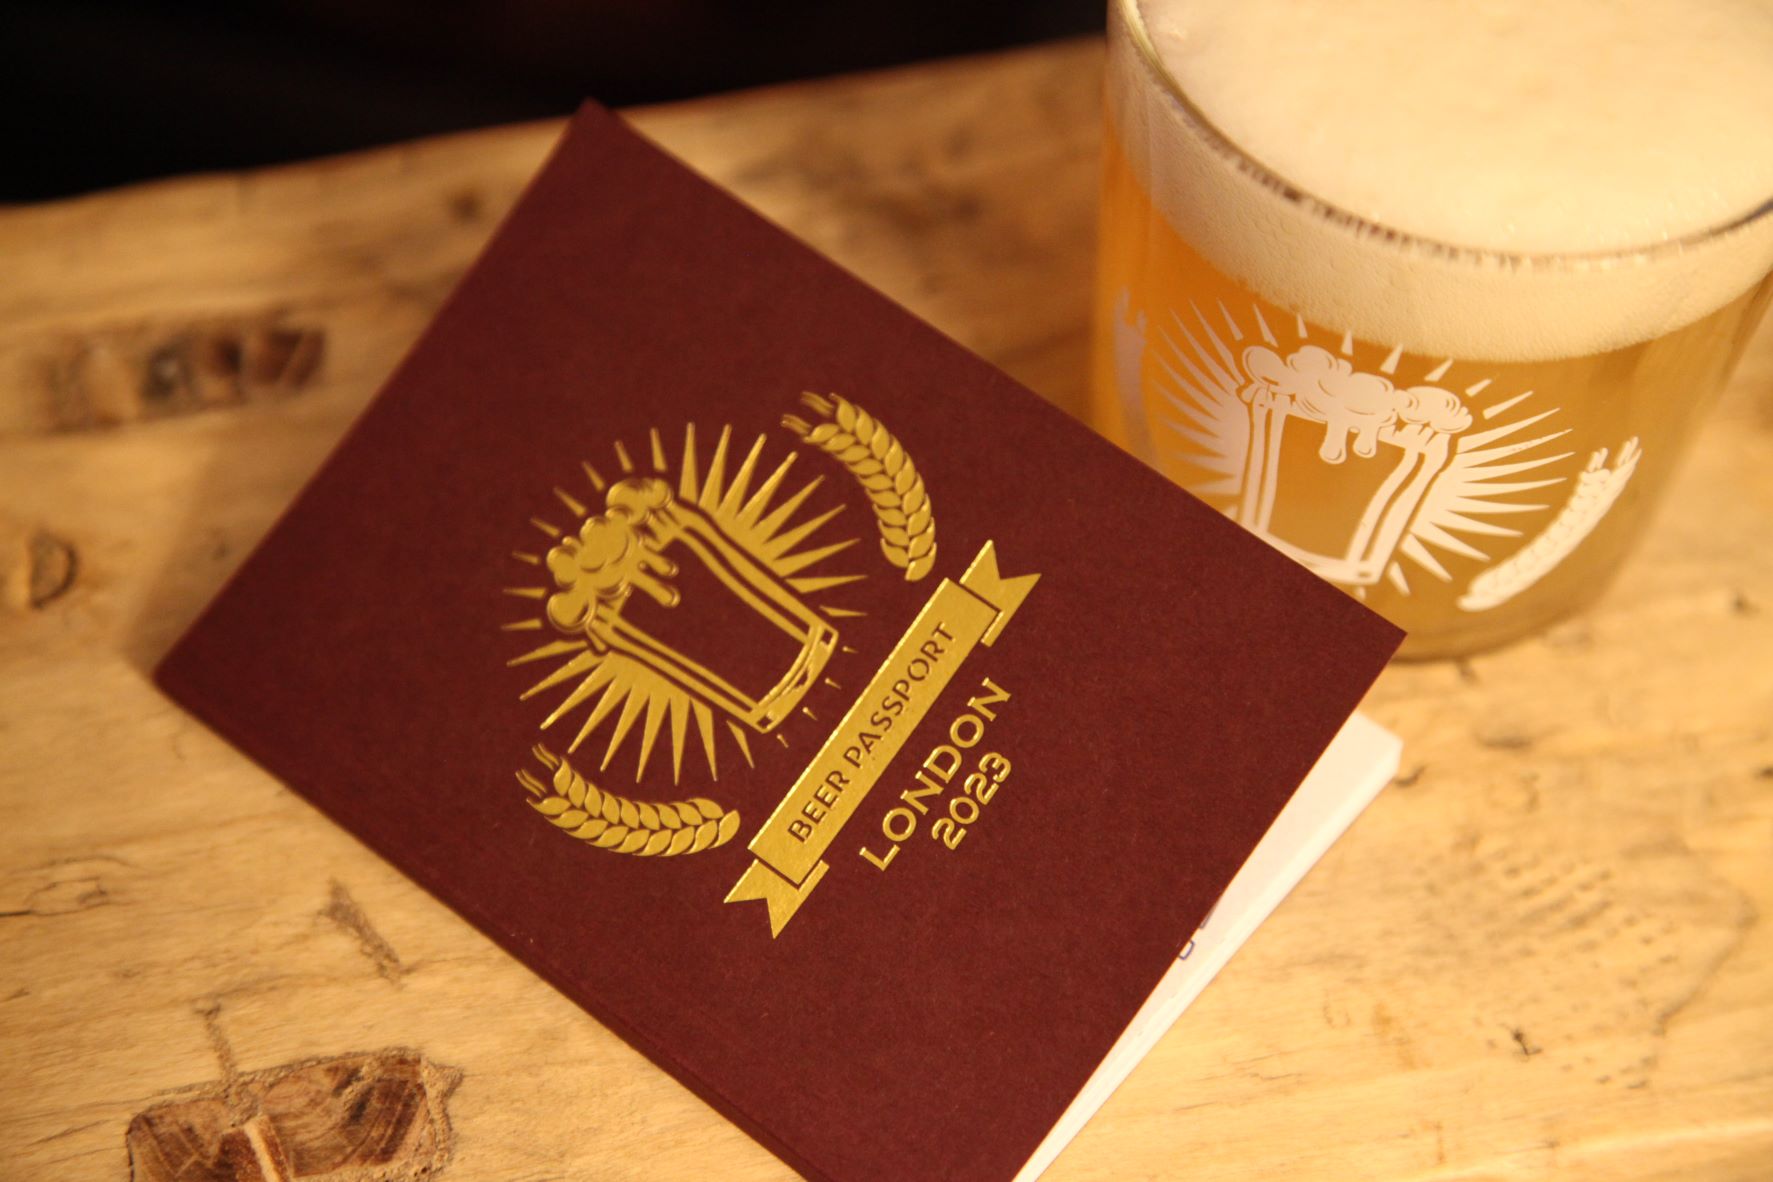 Beer Passport 2023 is now on sale, exploring 64 brewery taprooms across